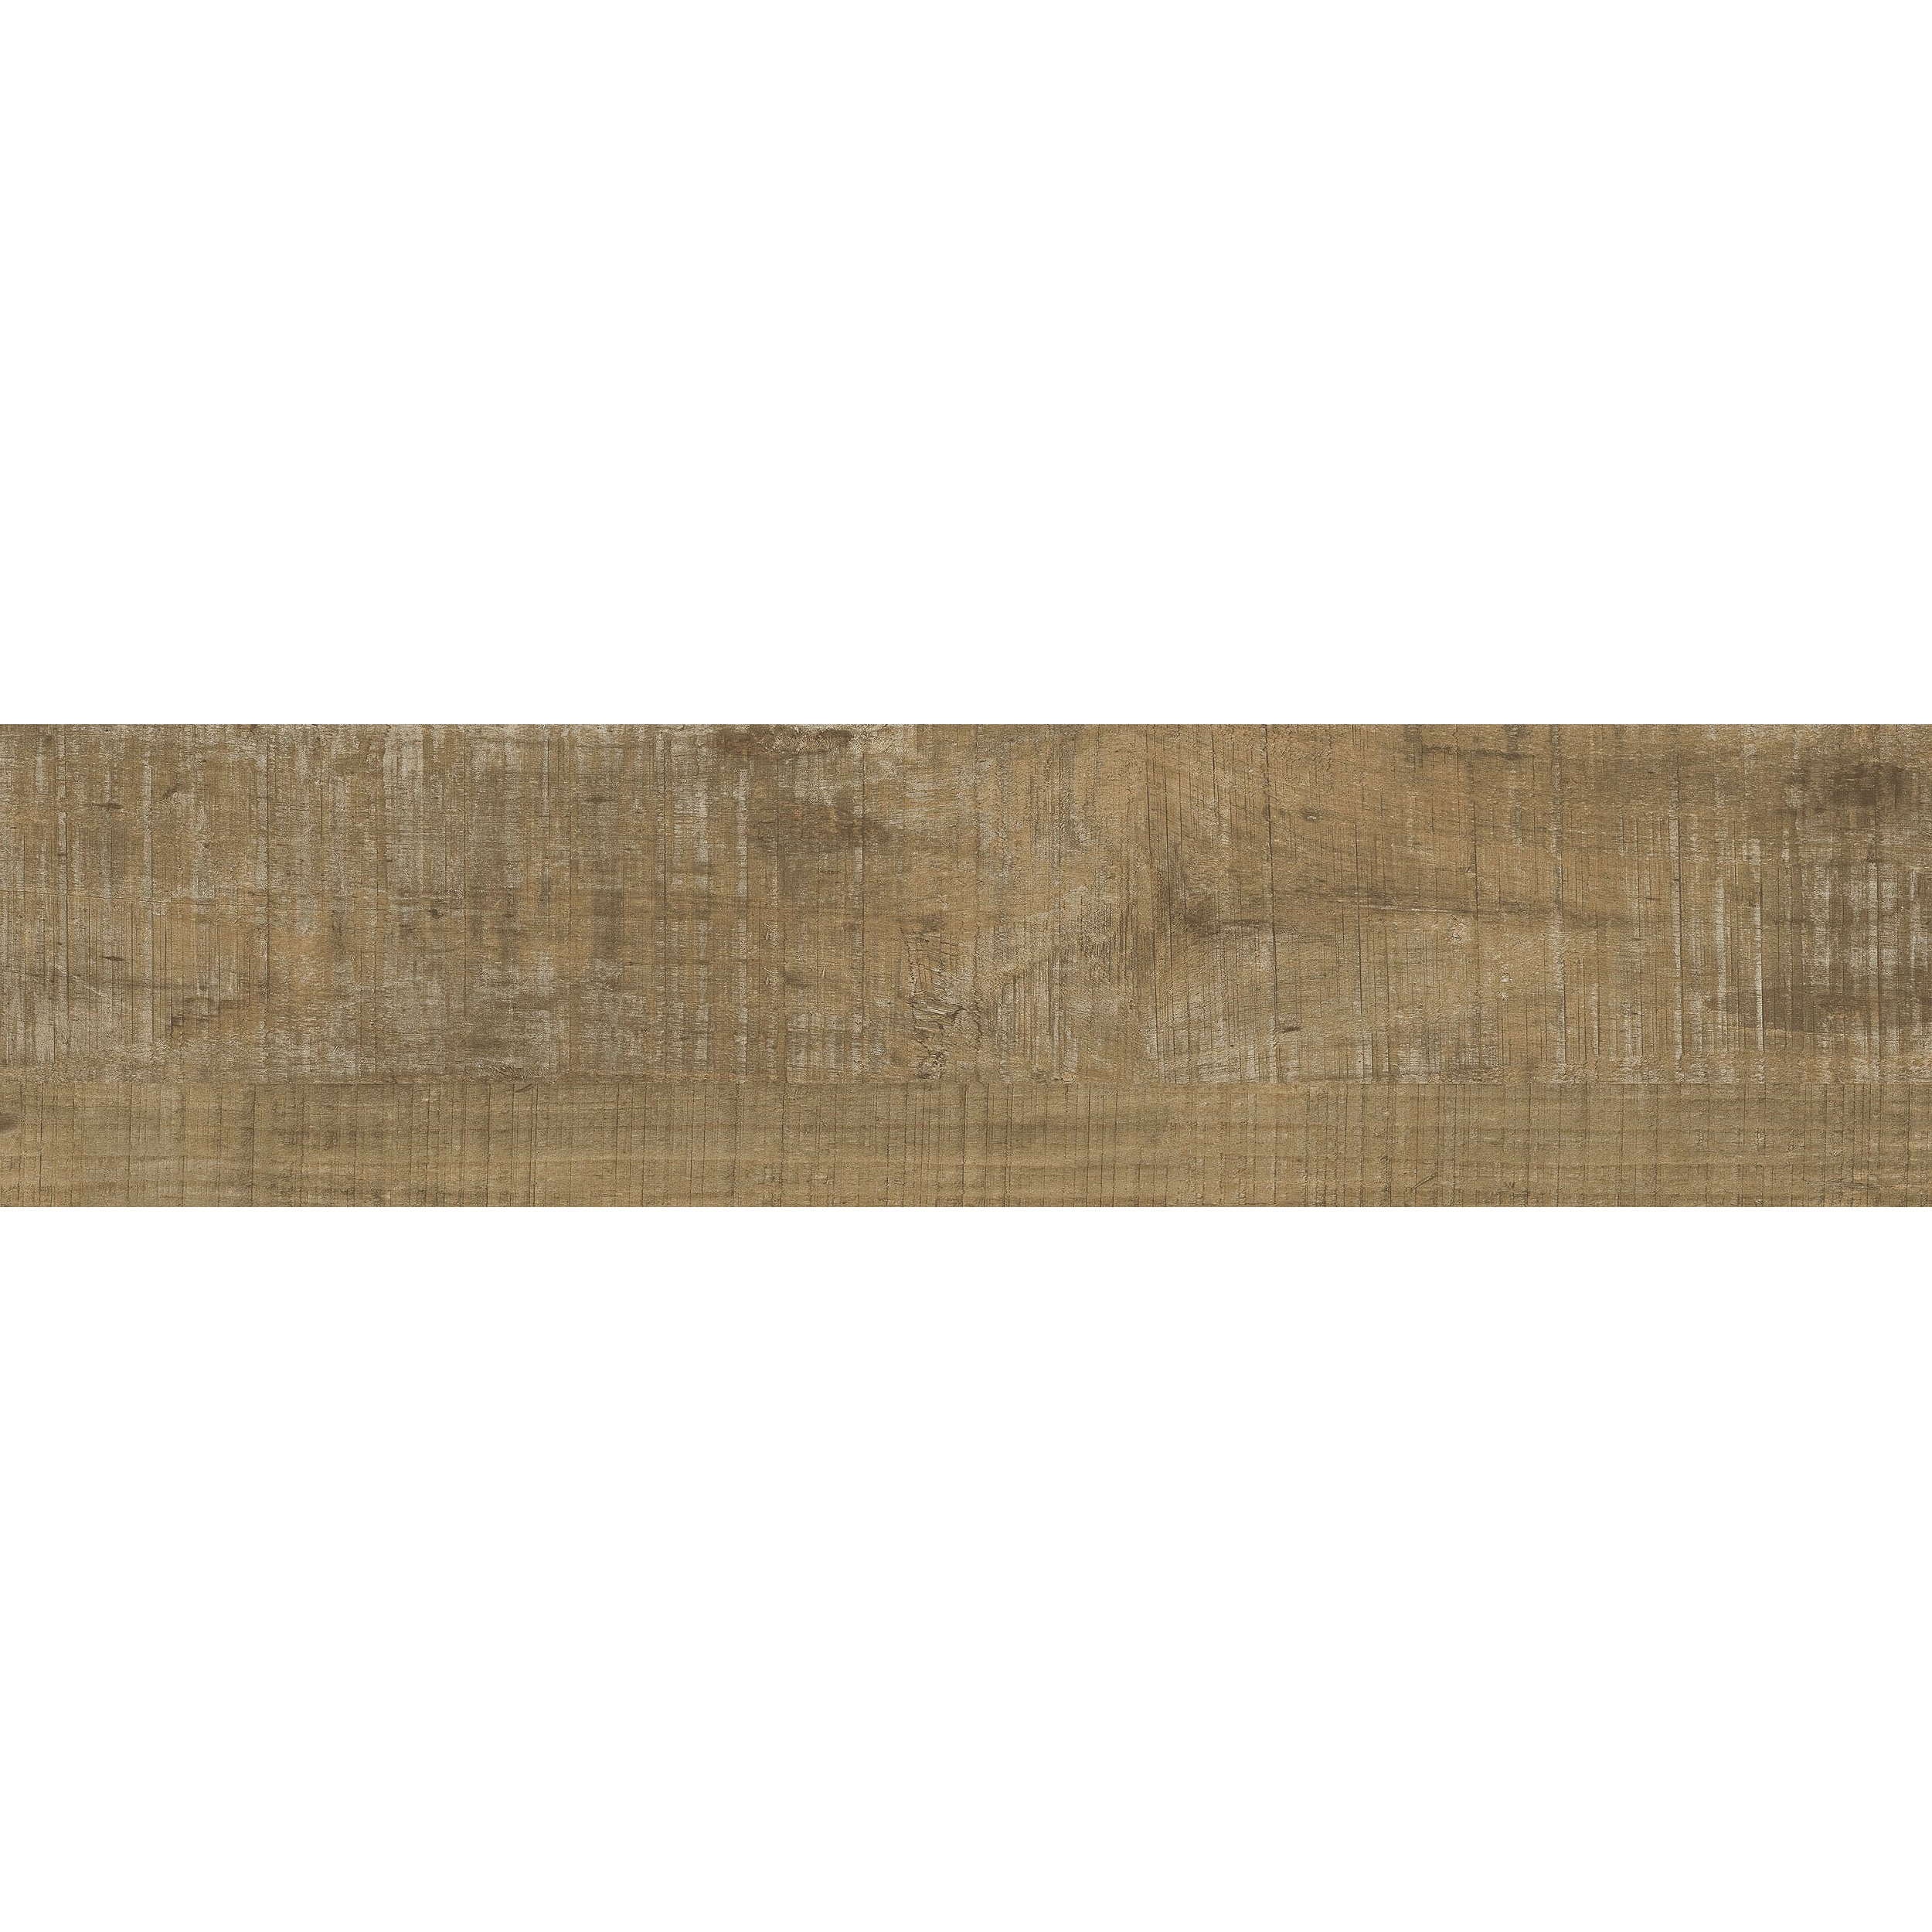 Textured Woodgrains LVT In Distressed Hickory número de imagen 11